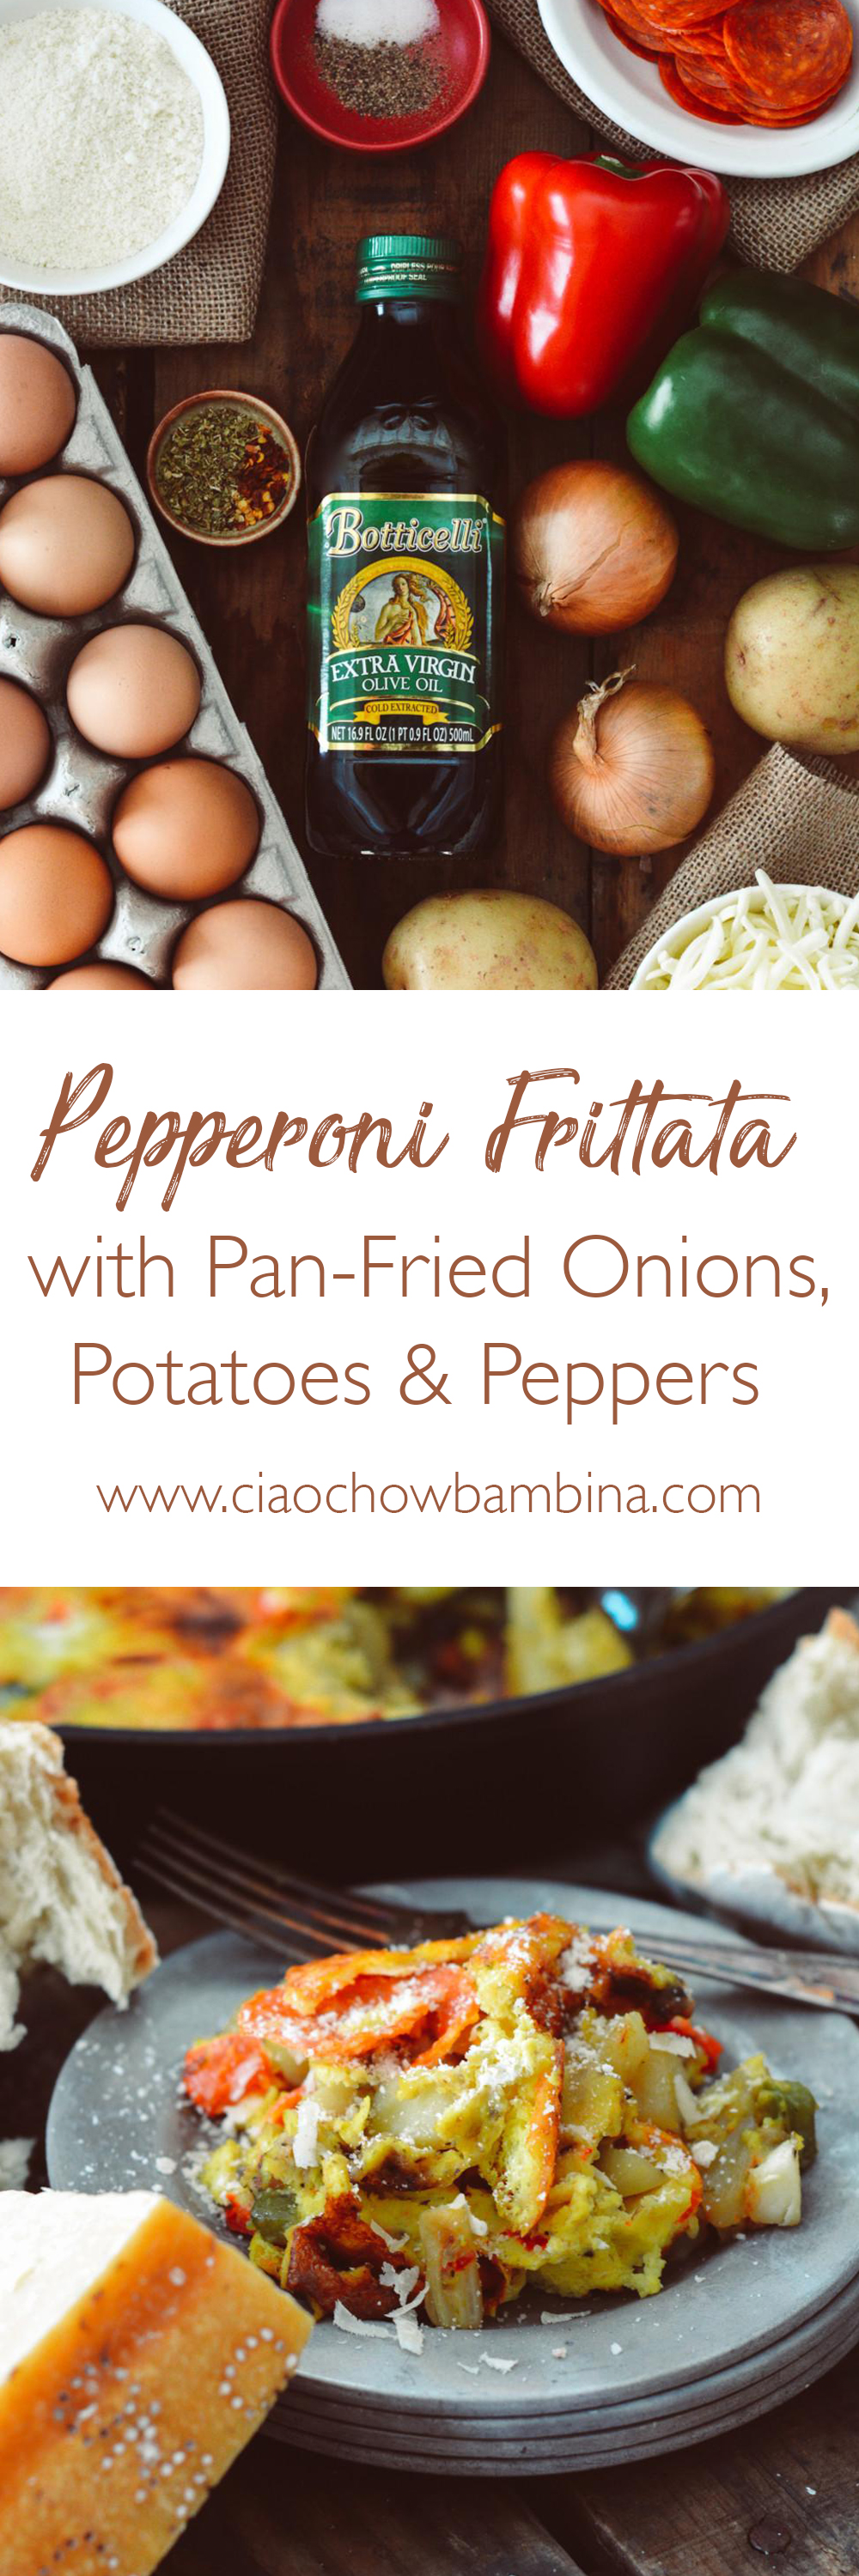 Pepperoni Frittata with Pan-Fried Onions, Potatoes & Peppers ciaochowbambina.com